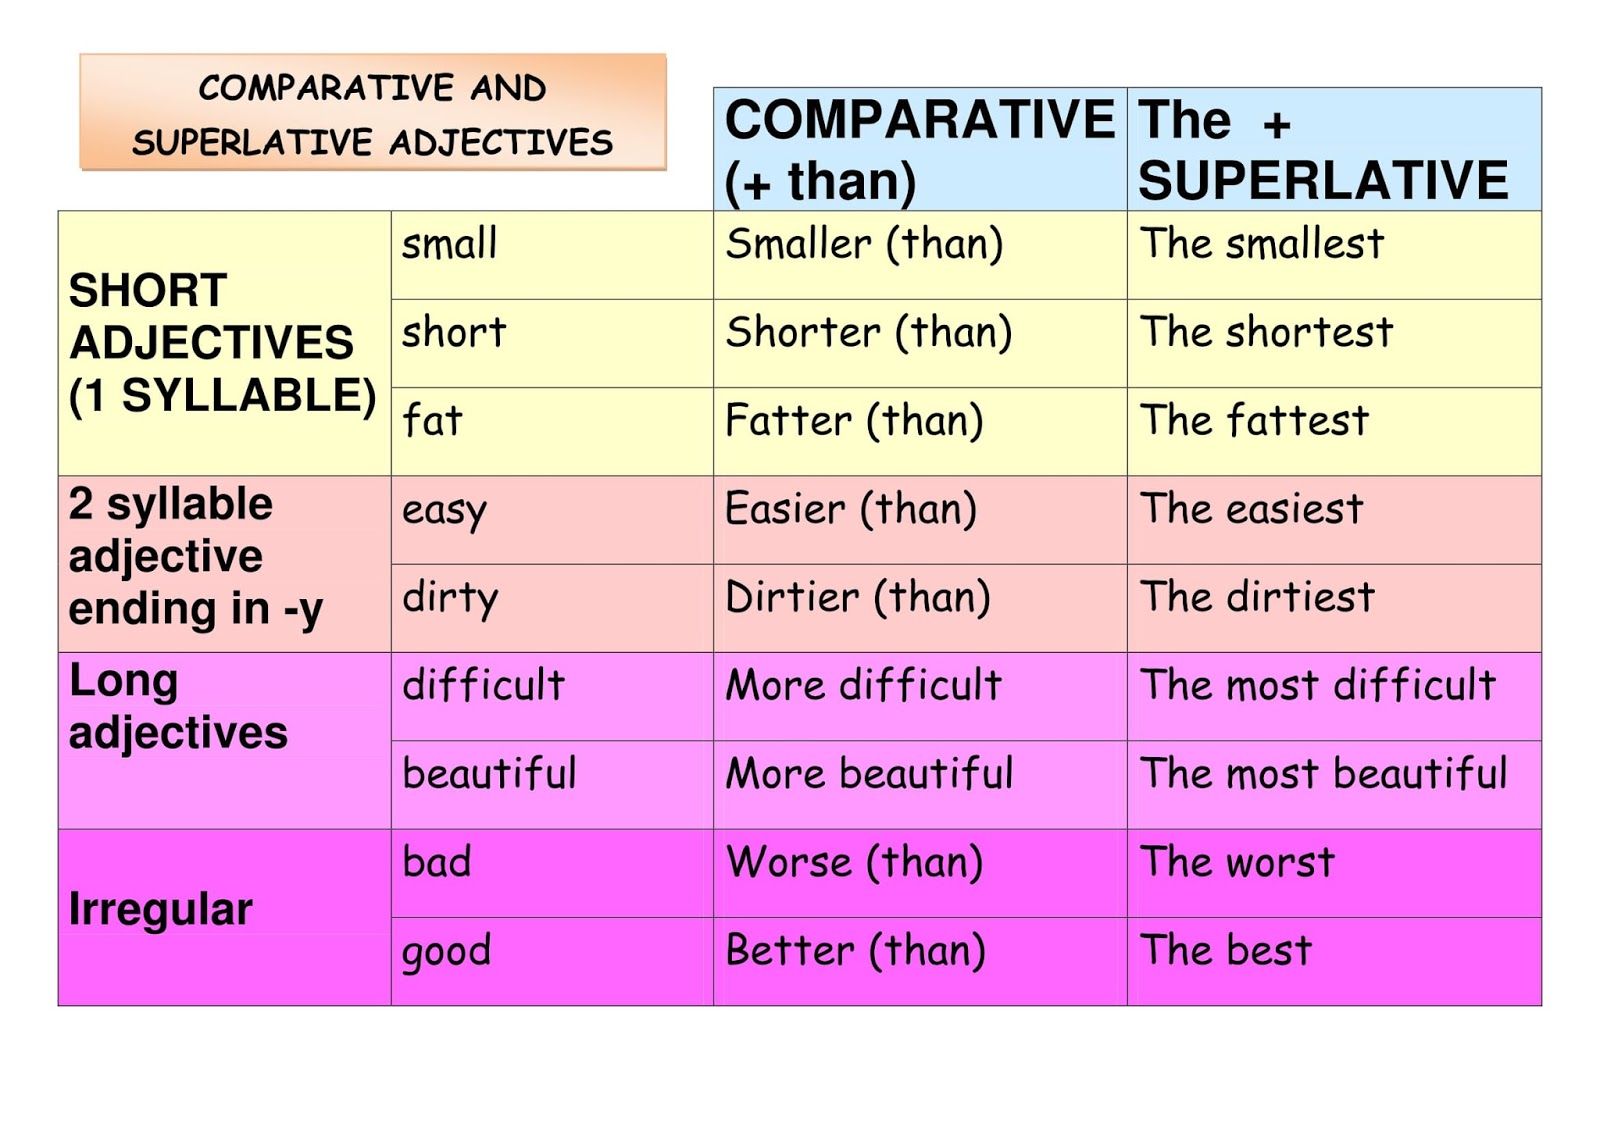 Adjective comparative superlative intelligent. Superlative adjectives правило. Таблица Comparative and Superlative. Comparative and Superlative forms of adjectives. Comparative and Superlative adjectives правило.